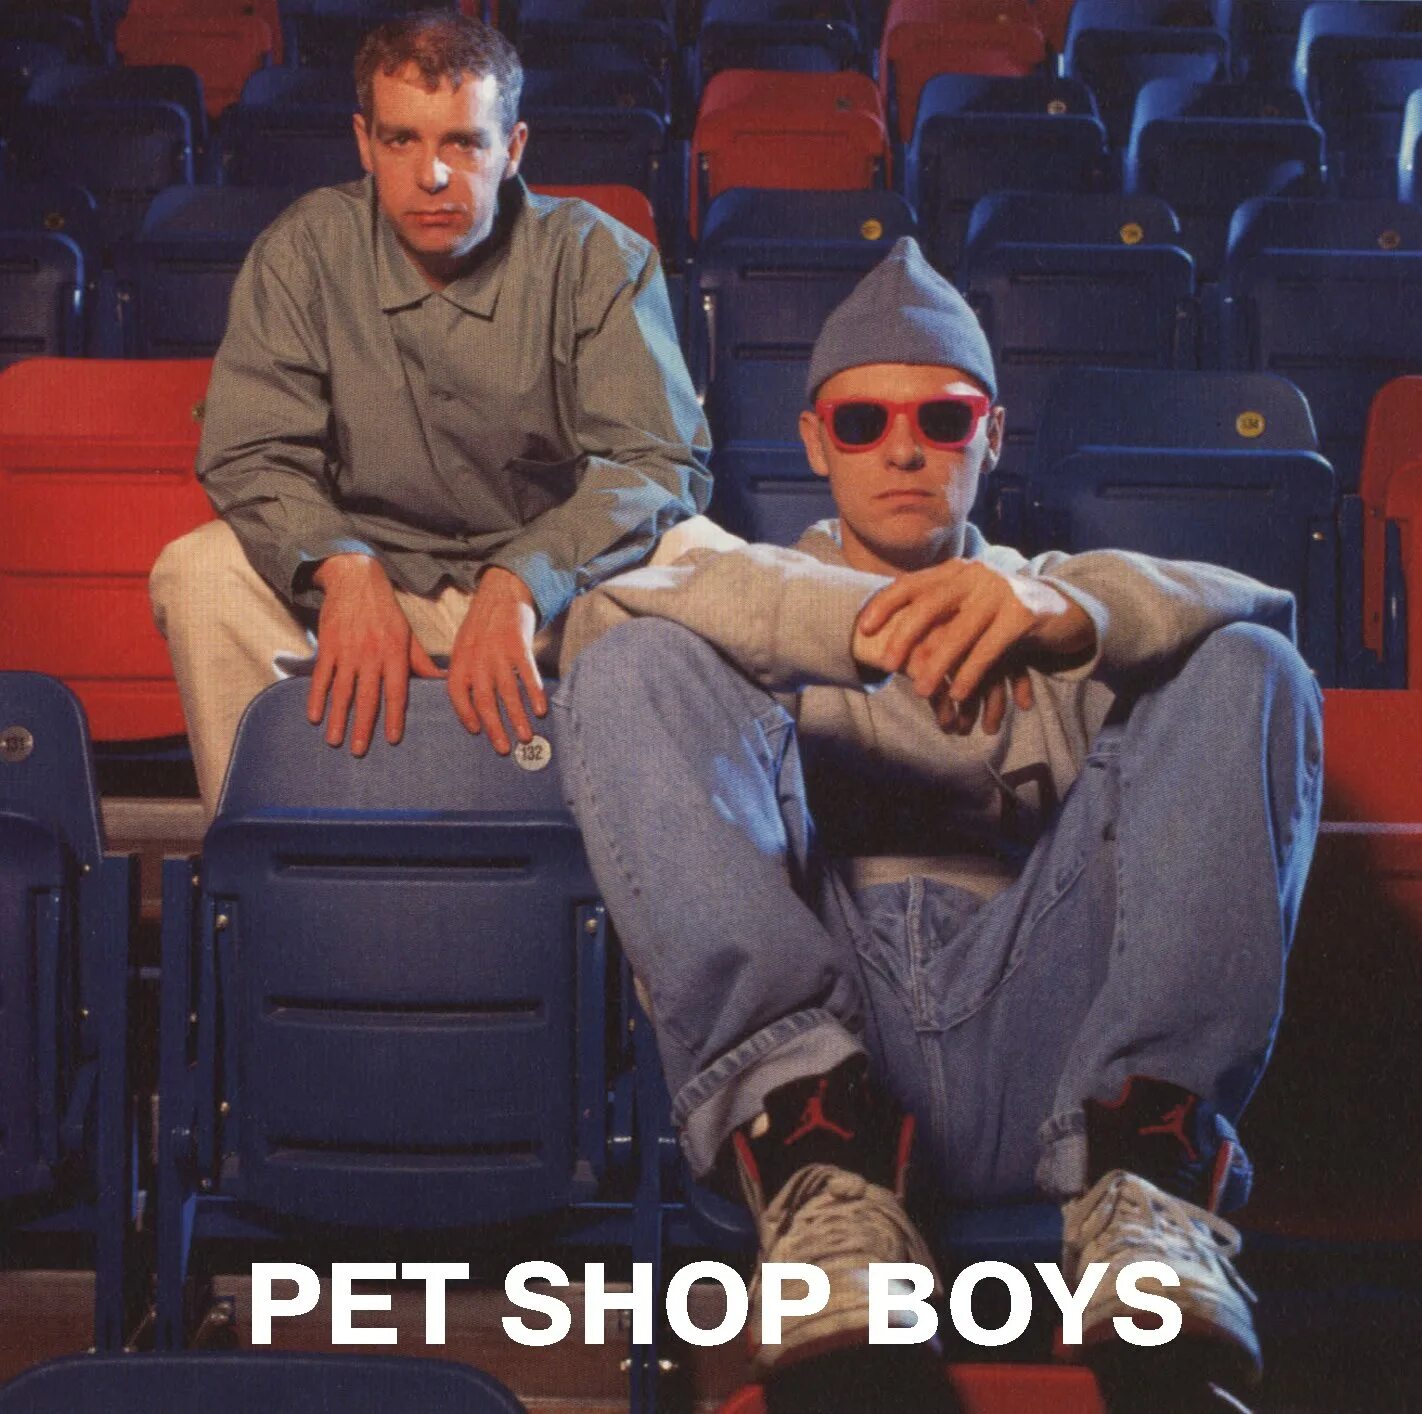 Pet shop boys. Pet shop boys фото. Pet shop boys Single. Pet shop boys хиты. Пет шоп бойс хиты